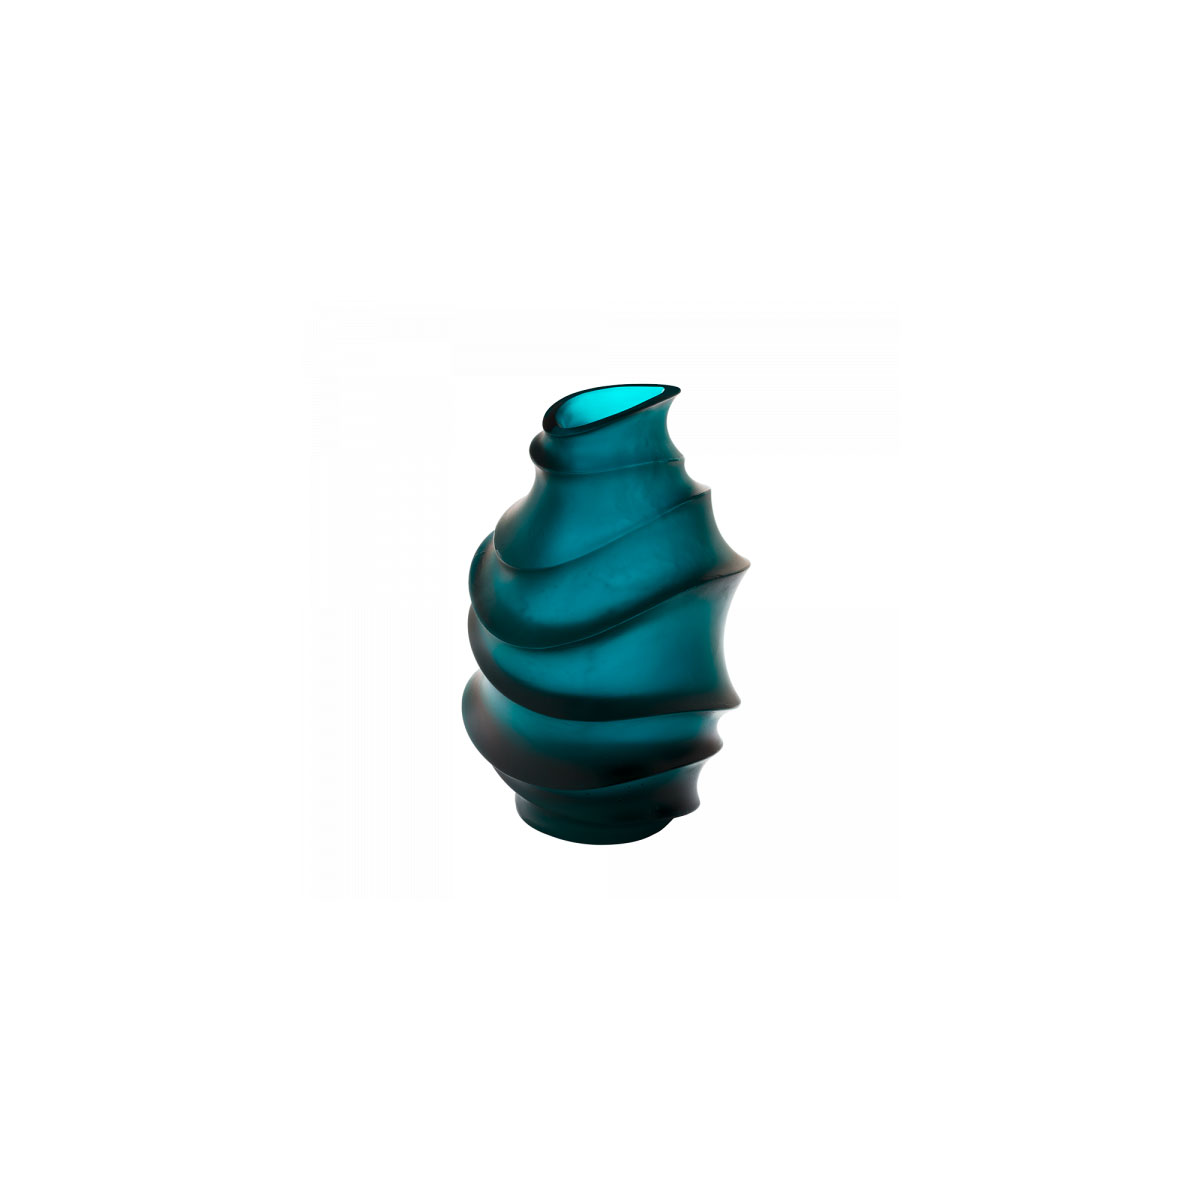 Daum Medium Sand Vase in Blue by Christian Ghion, Limited Edition